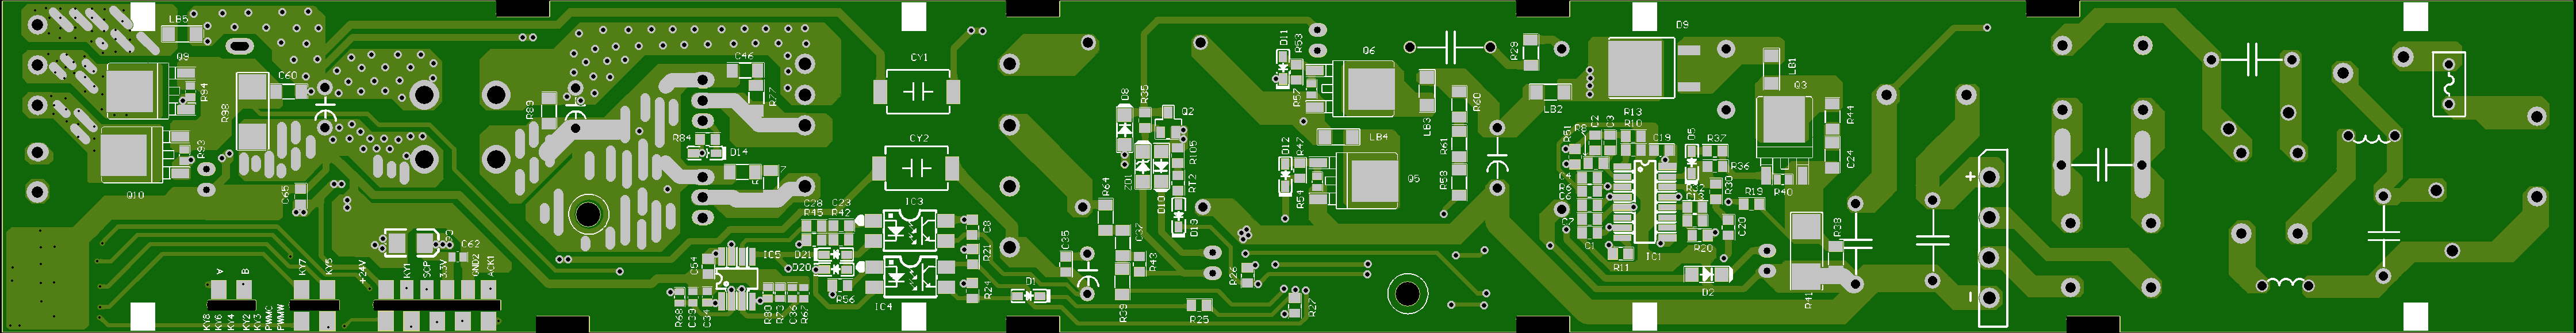 0-150W双路调光开关电源PCB设计原理图2